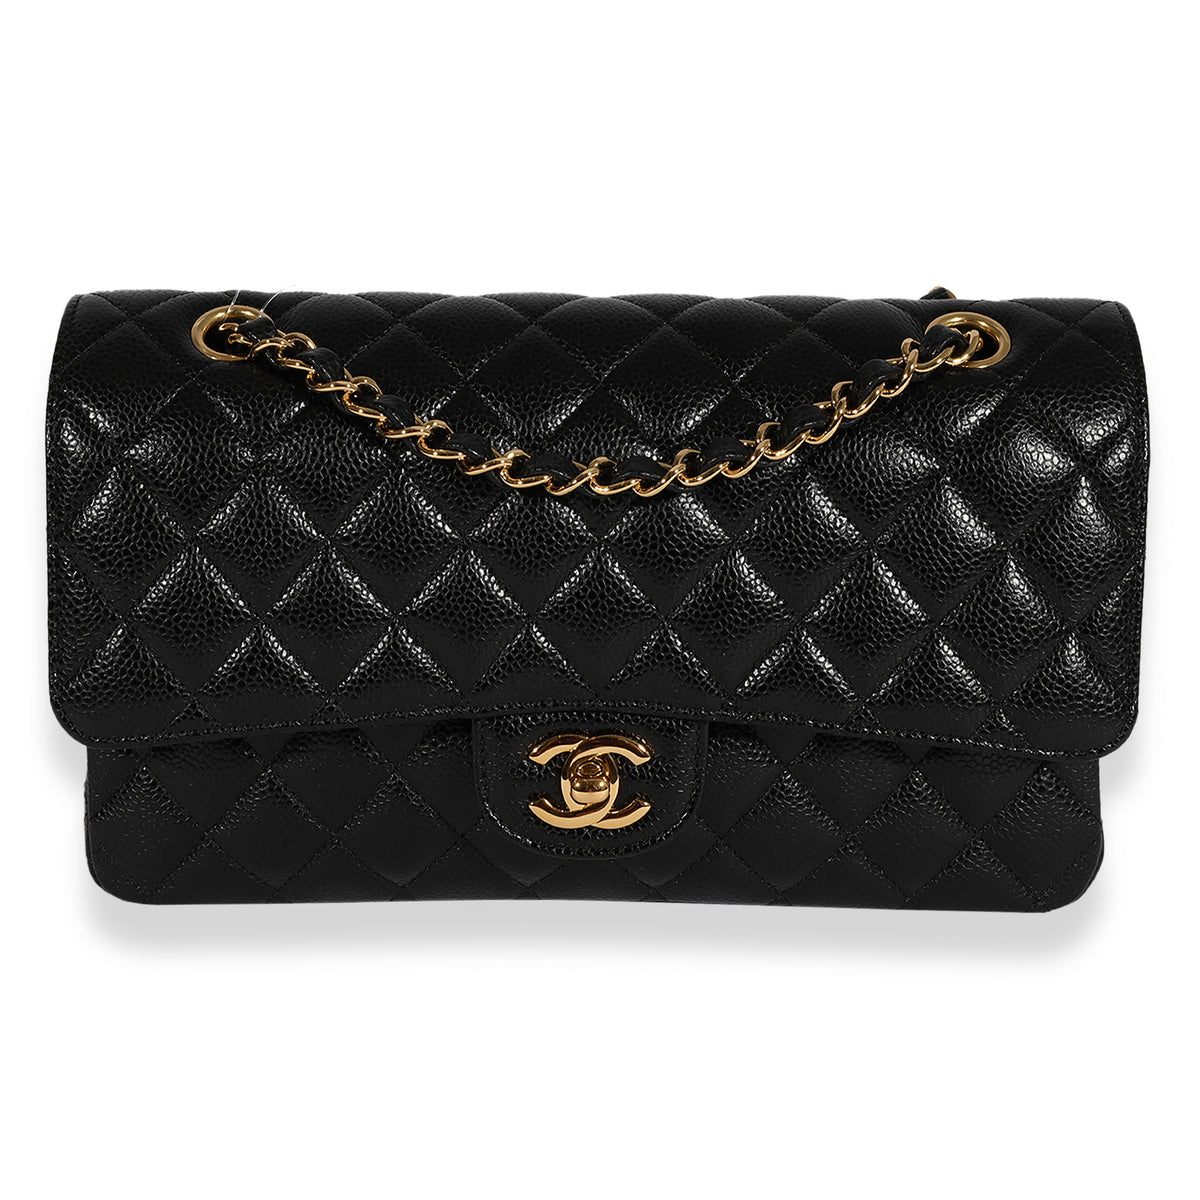 CHANEL Caviar Leather Vintage Handbag Gold Buckle Handbag Black